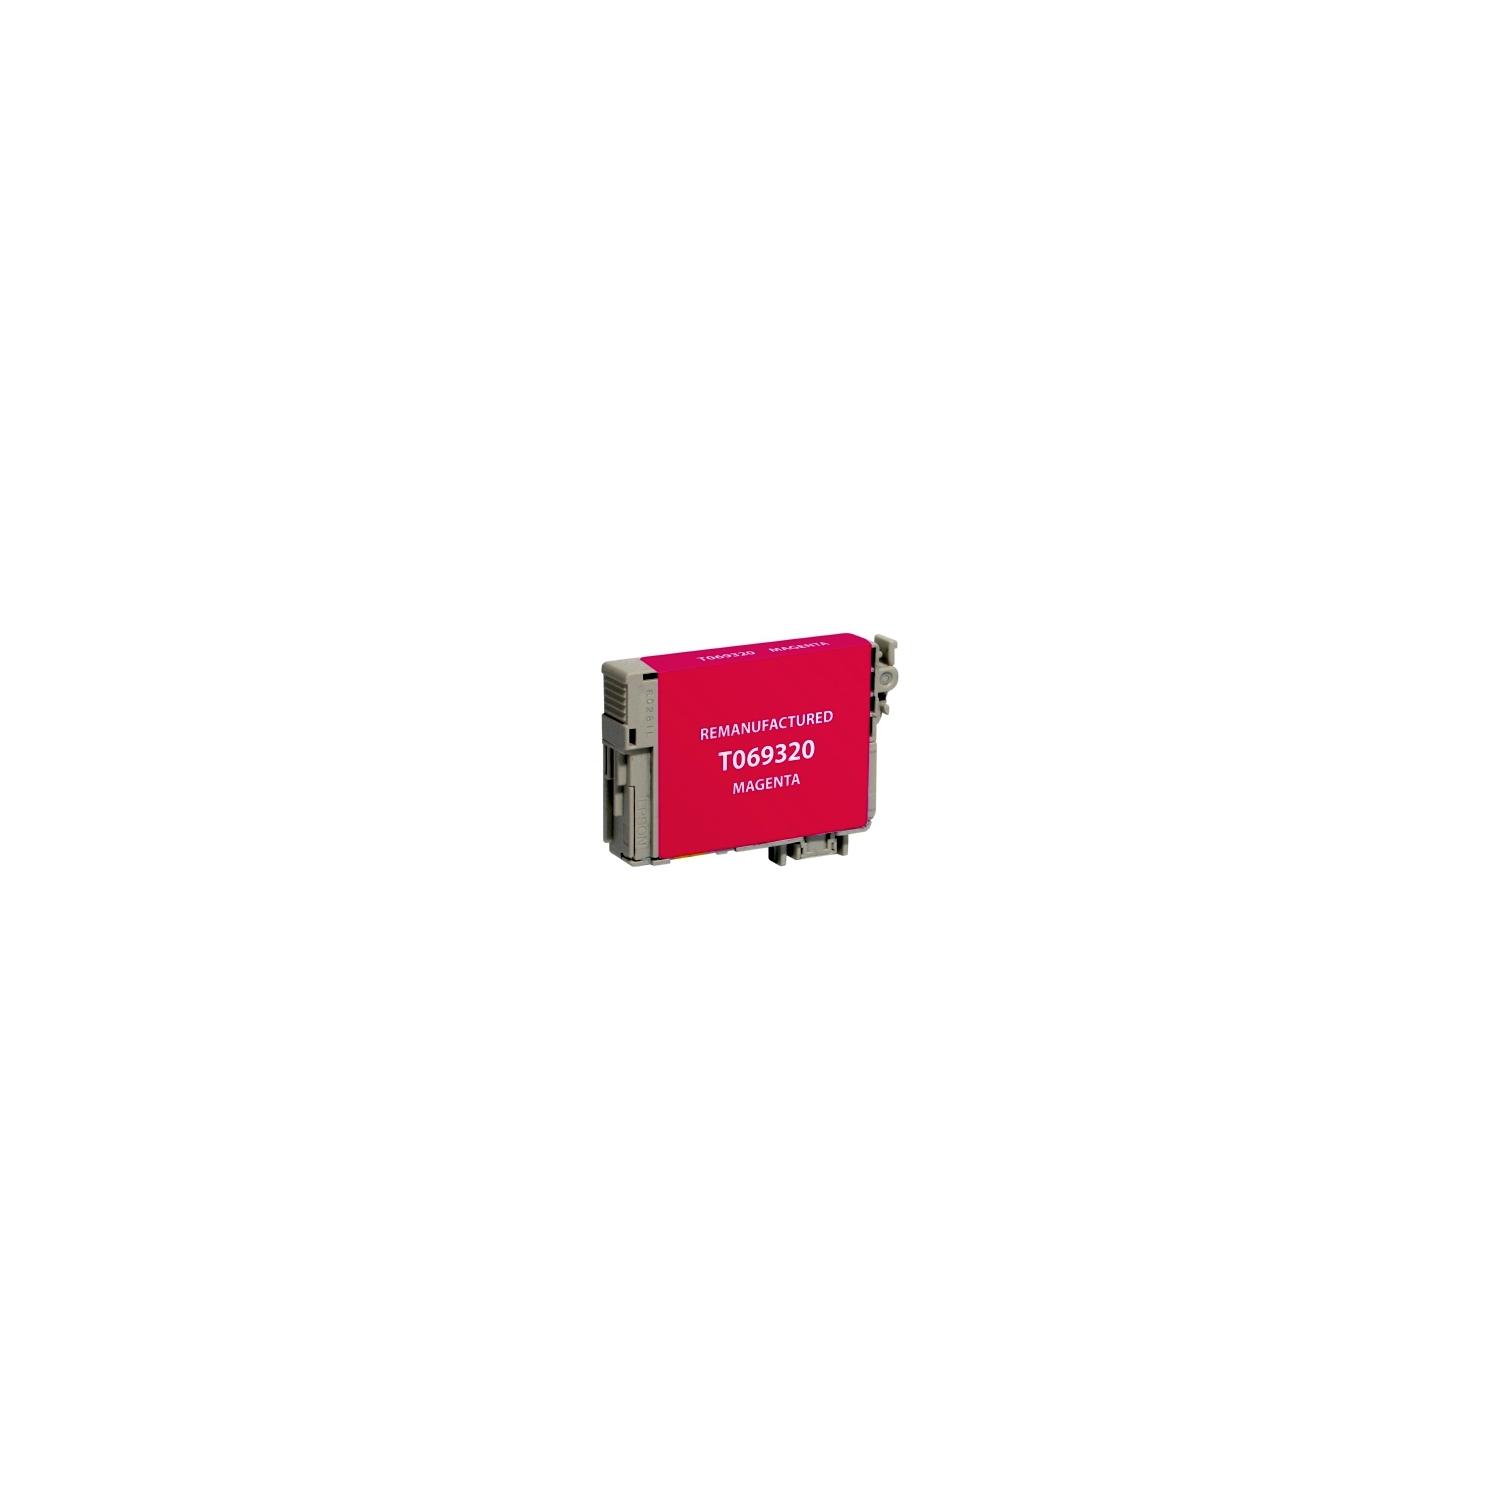 Ink House Compatible Epson T069320 Magenta Inkjet Cartridge for use in Stylus C120, NX510, WorkForce 40, WorkForce 1100